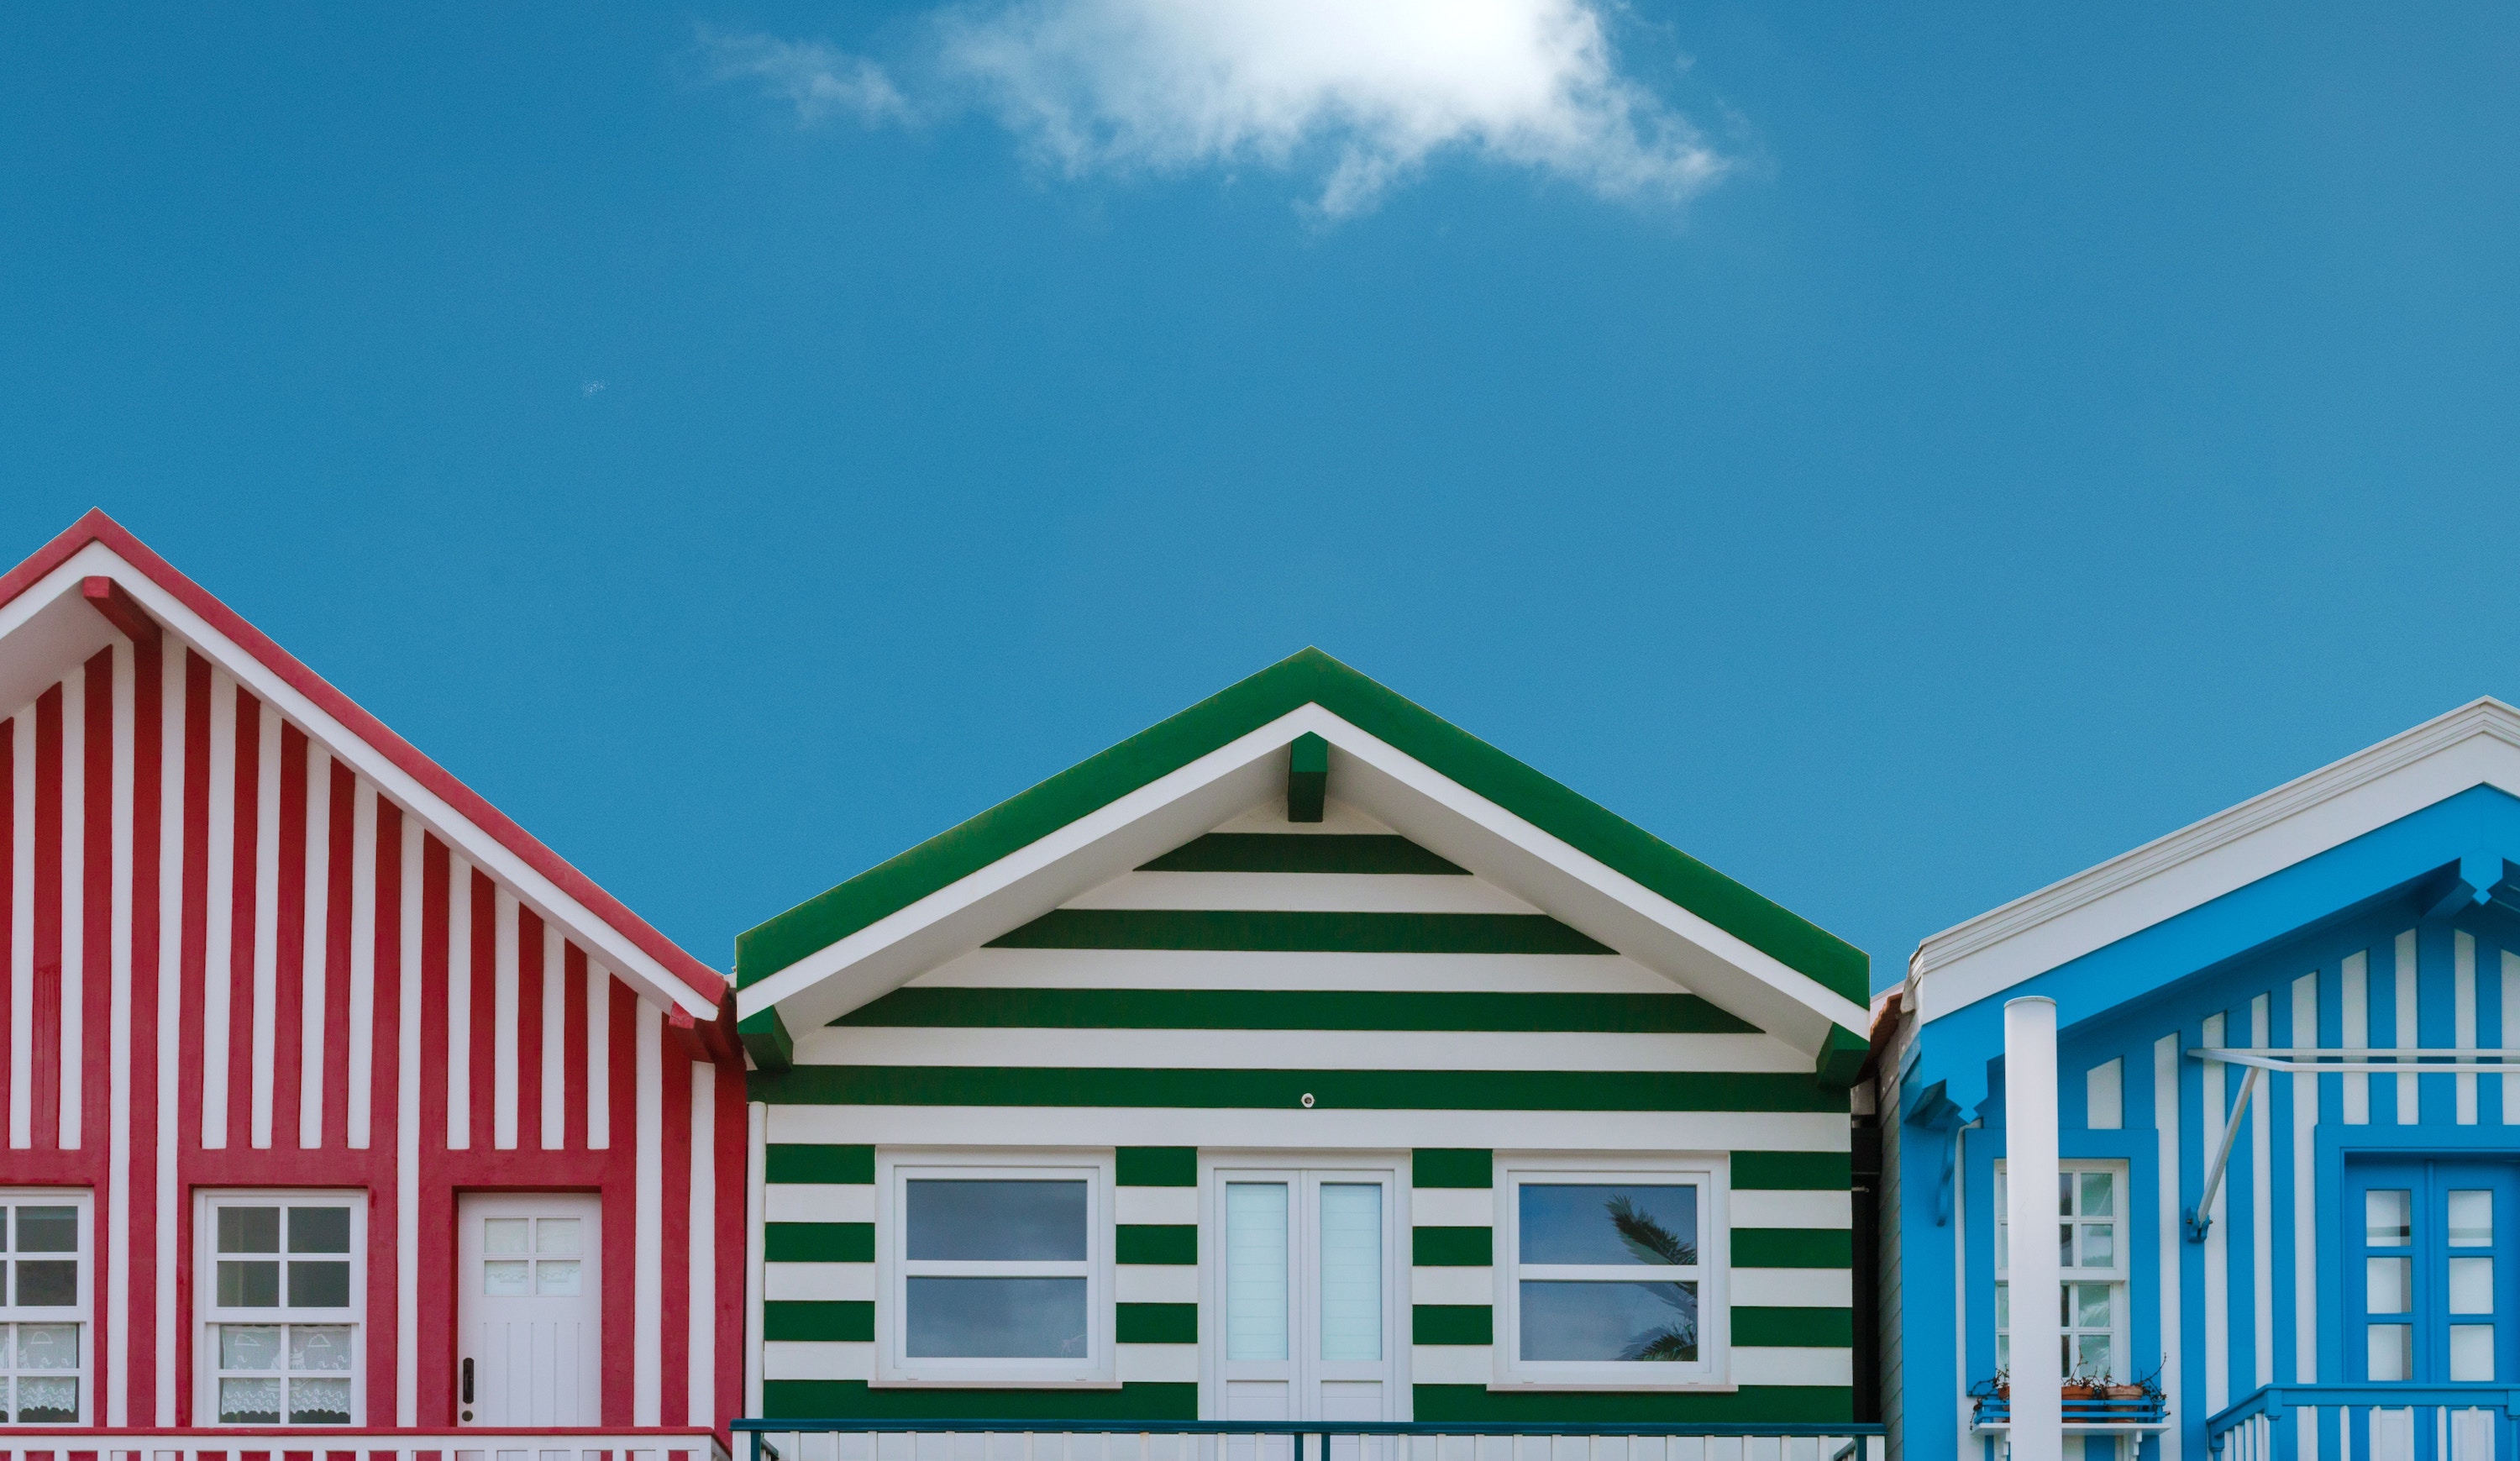 Three striped houses against a blue sky